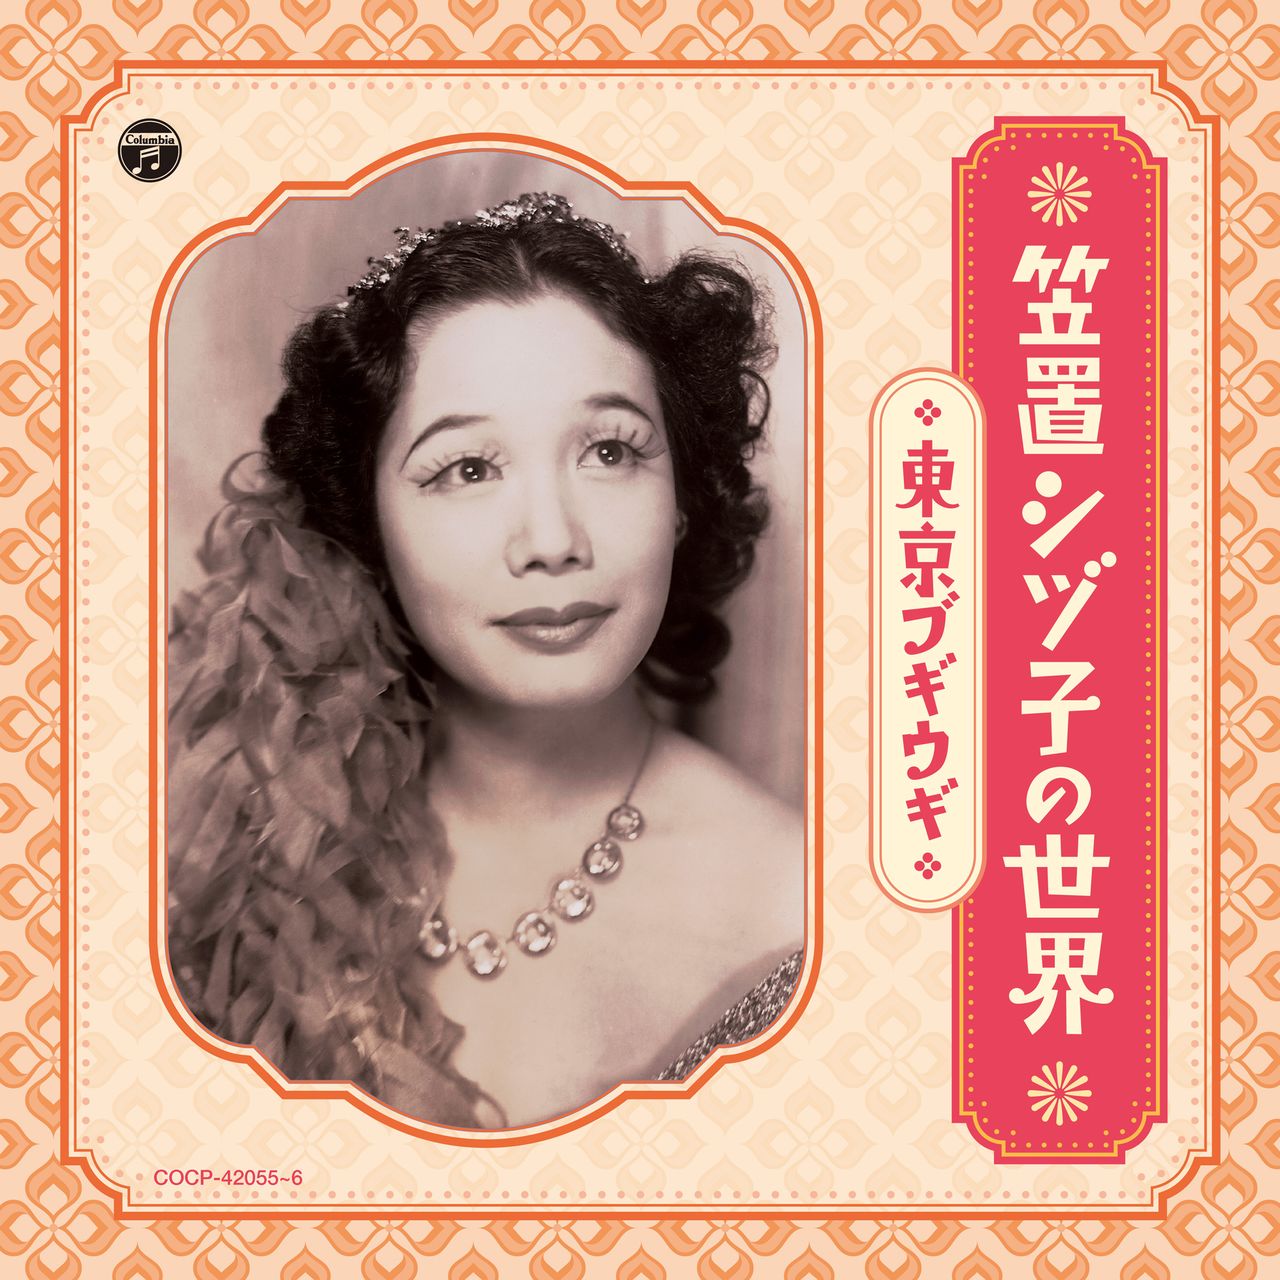 Kasagi Shizuko no sekai: Tōkyō bugi wugi (The World of Kasagi Shizuko: Tokyo Boogie Woogie), a two-CD collection of Kasagi’s recorded songs (including all her “boogies”), recently released by Nippon Columbia.